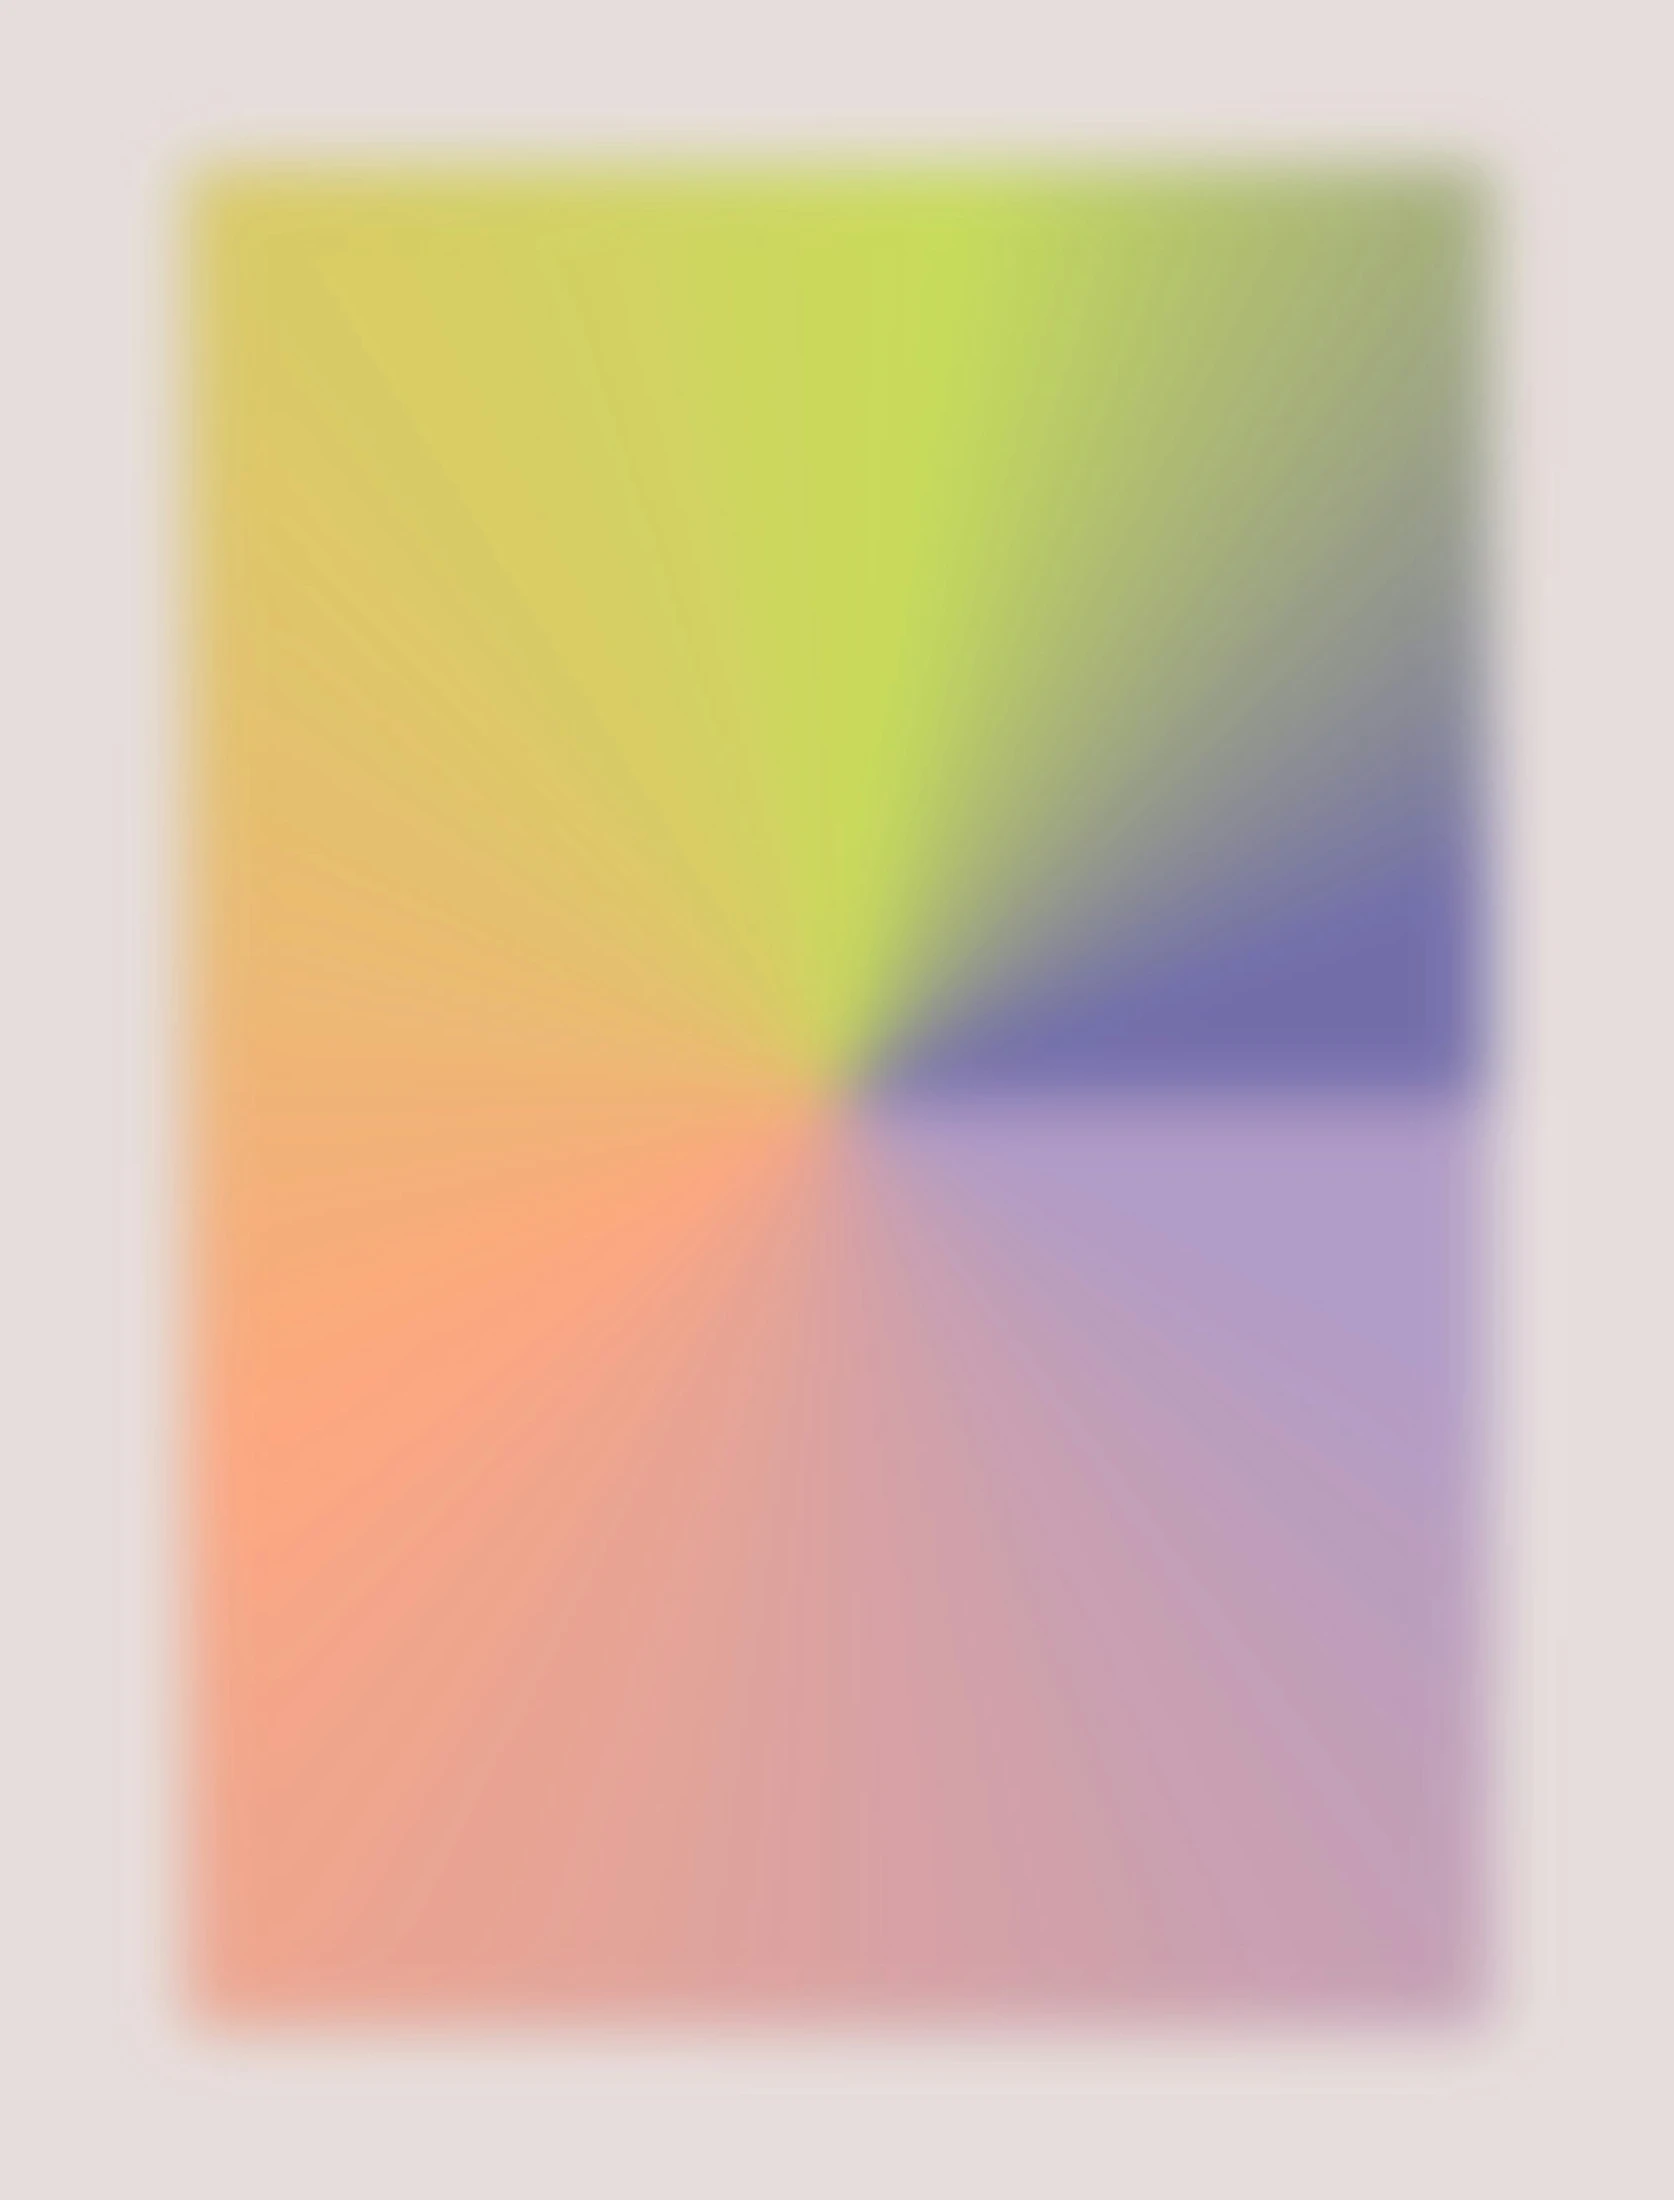 a square with a bright color scheme